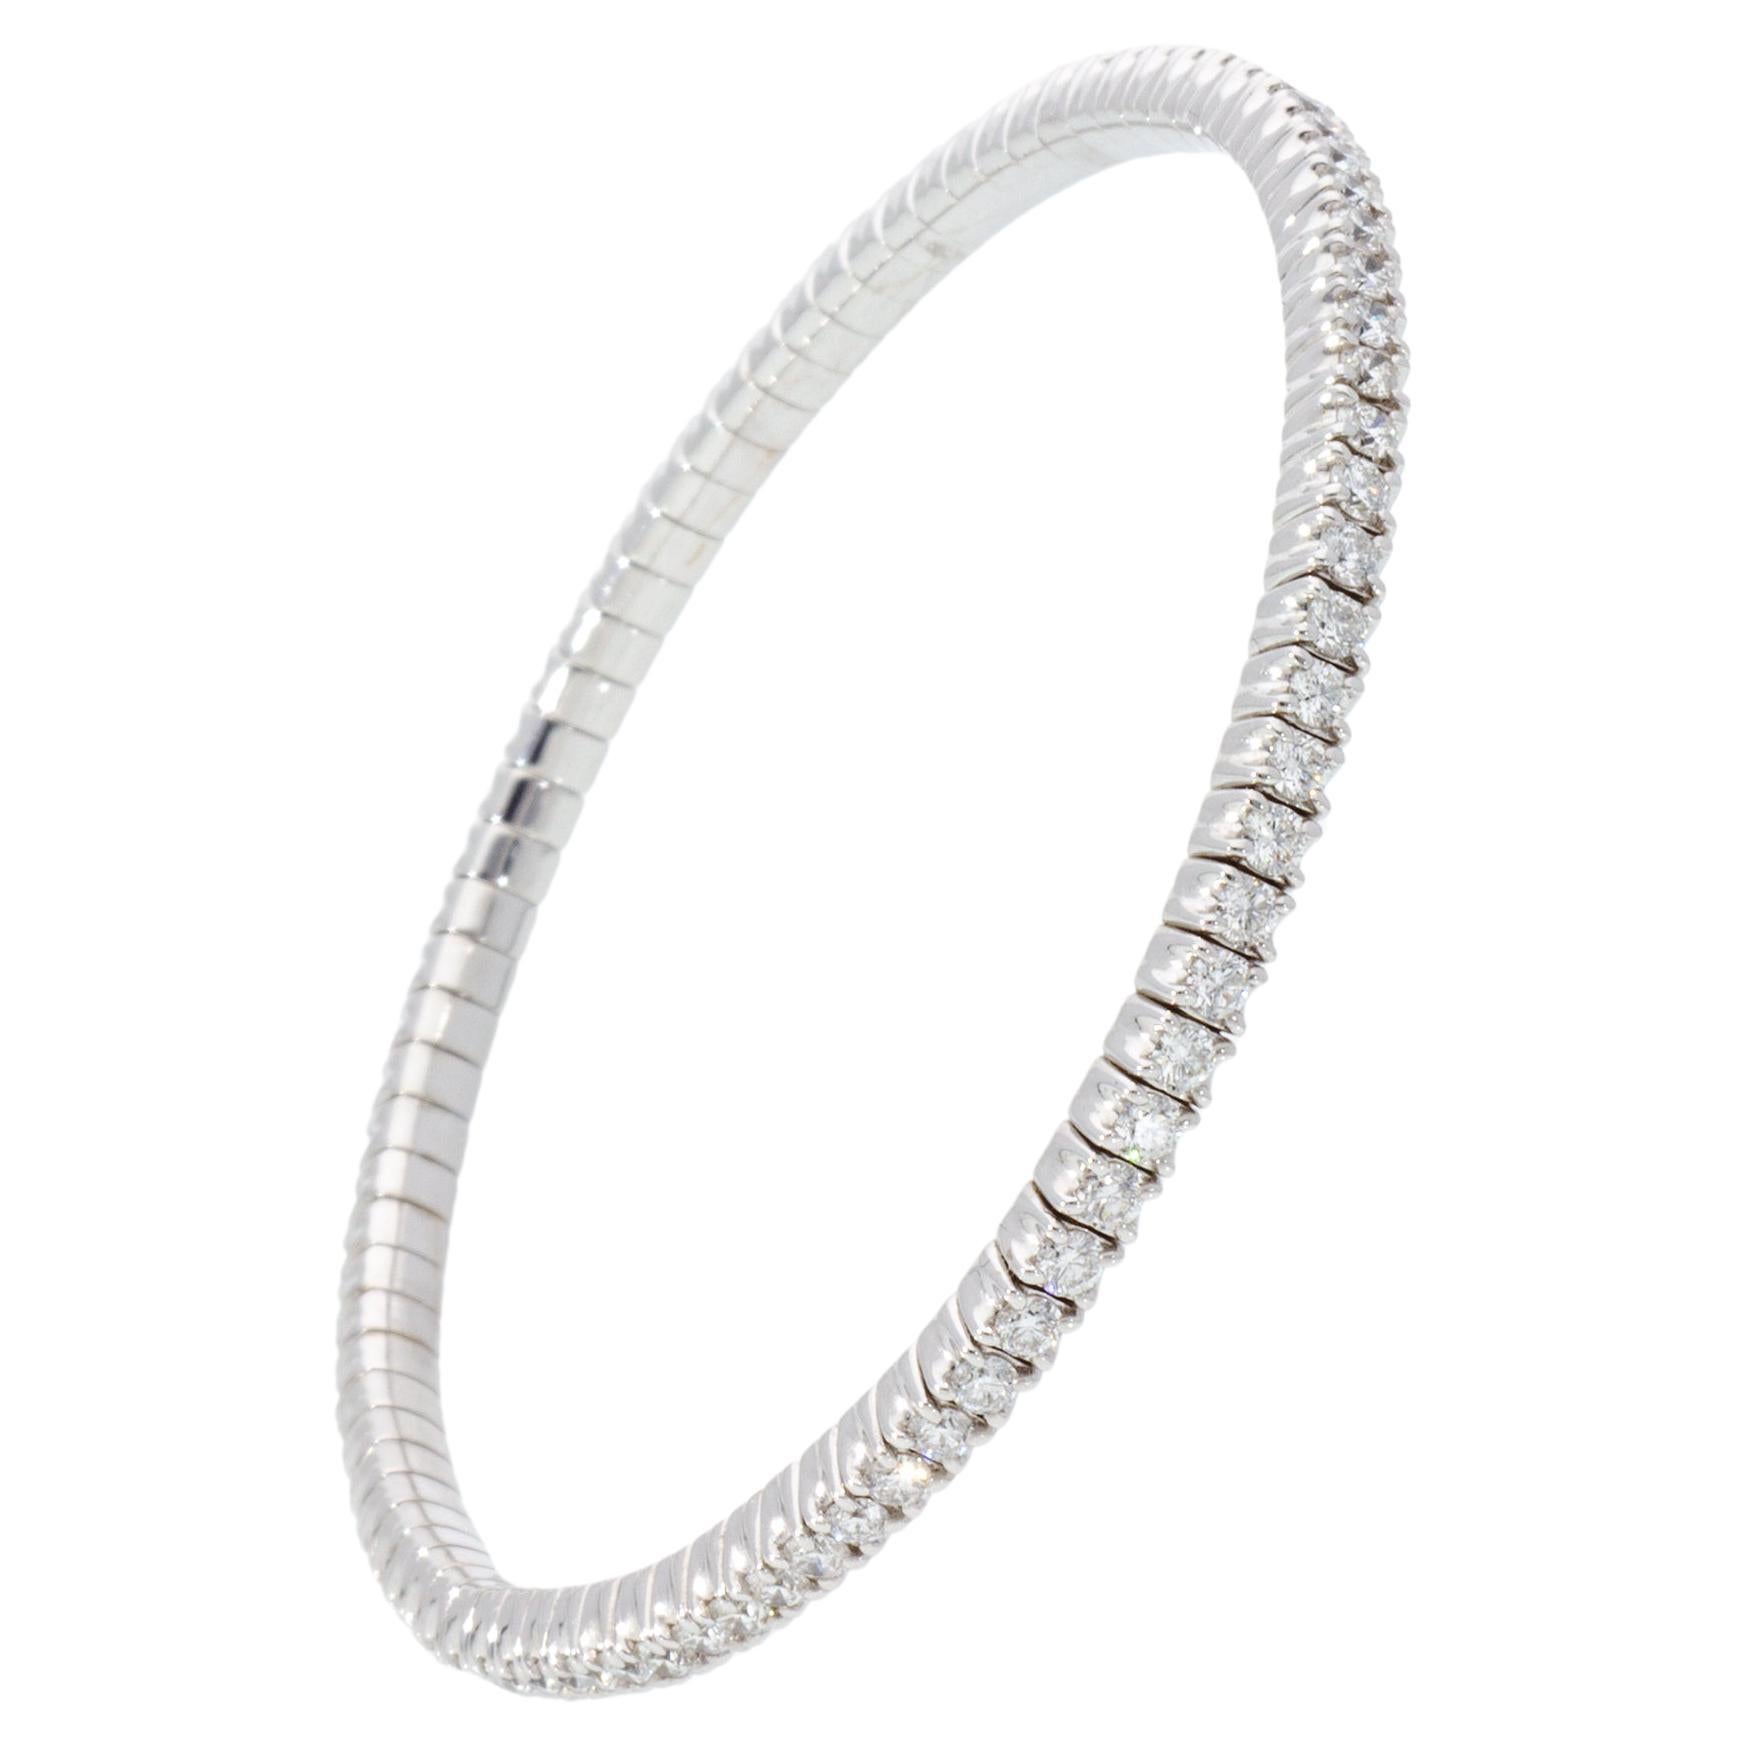 Elastic Bracelet with 2.85 ct of Diamonds, 18 Kt White Gold Bracelet